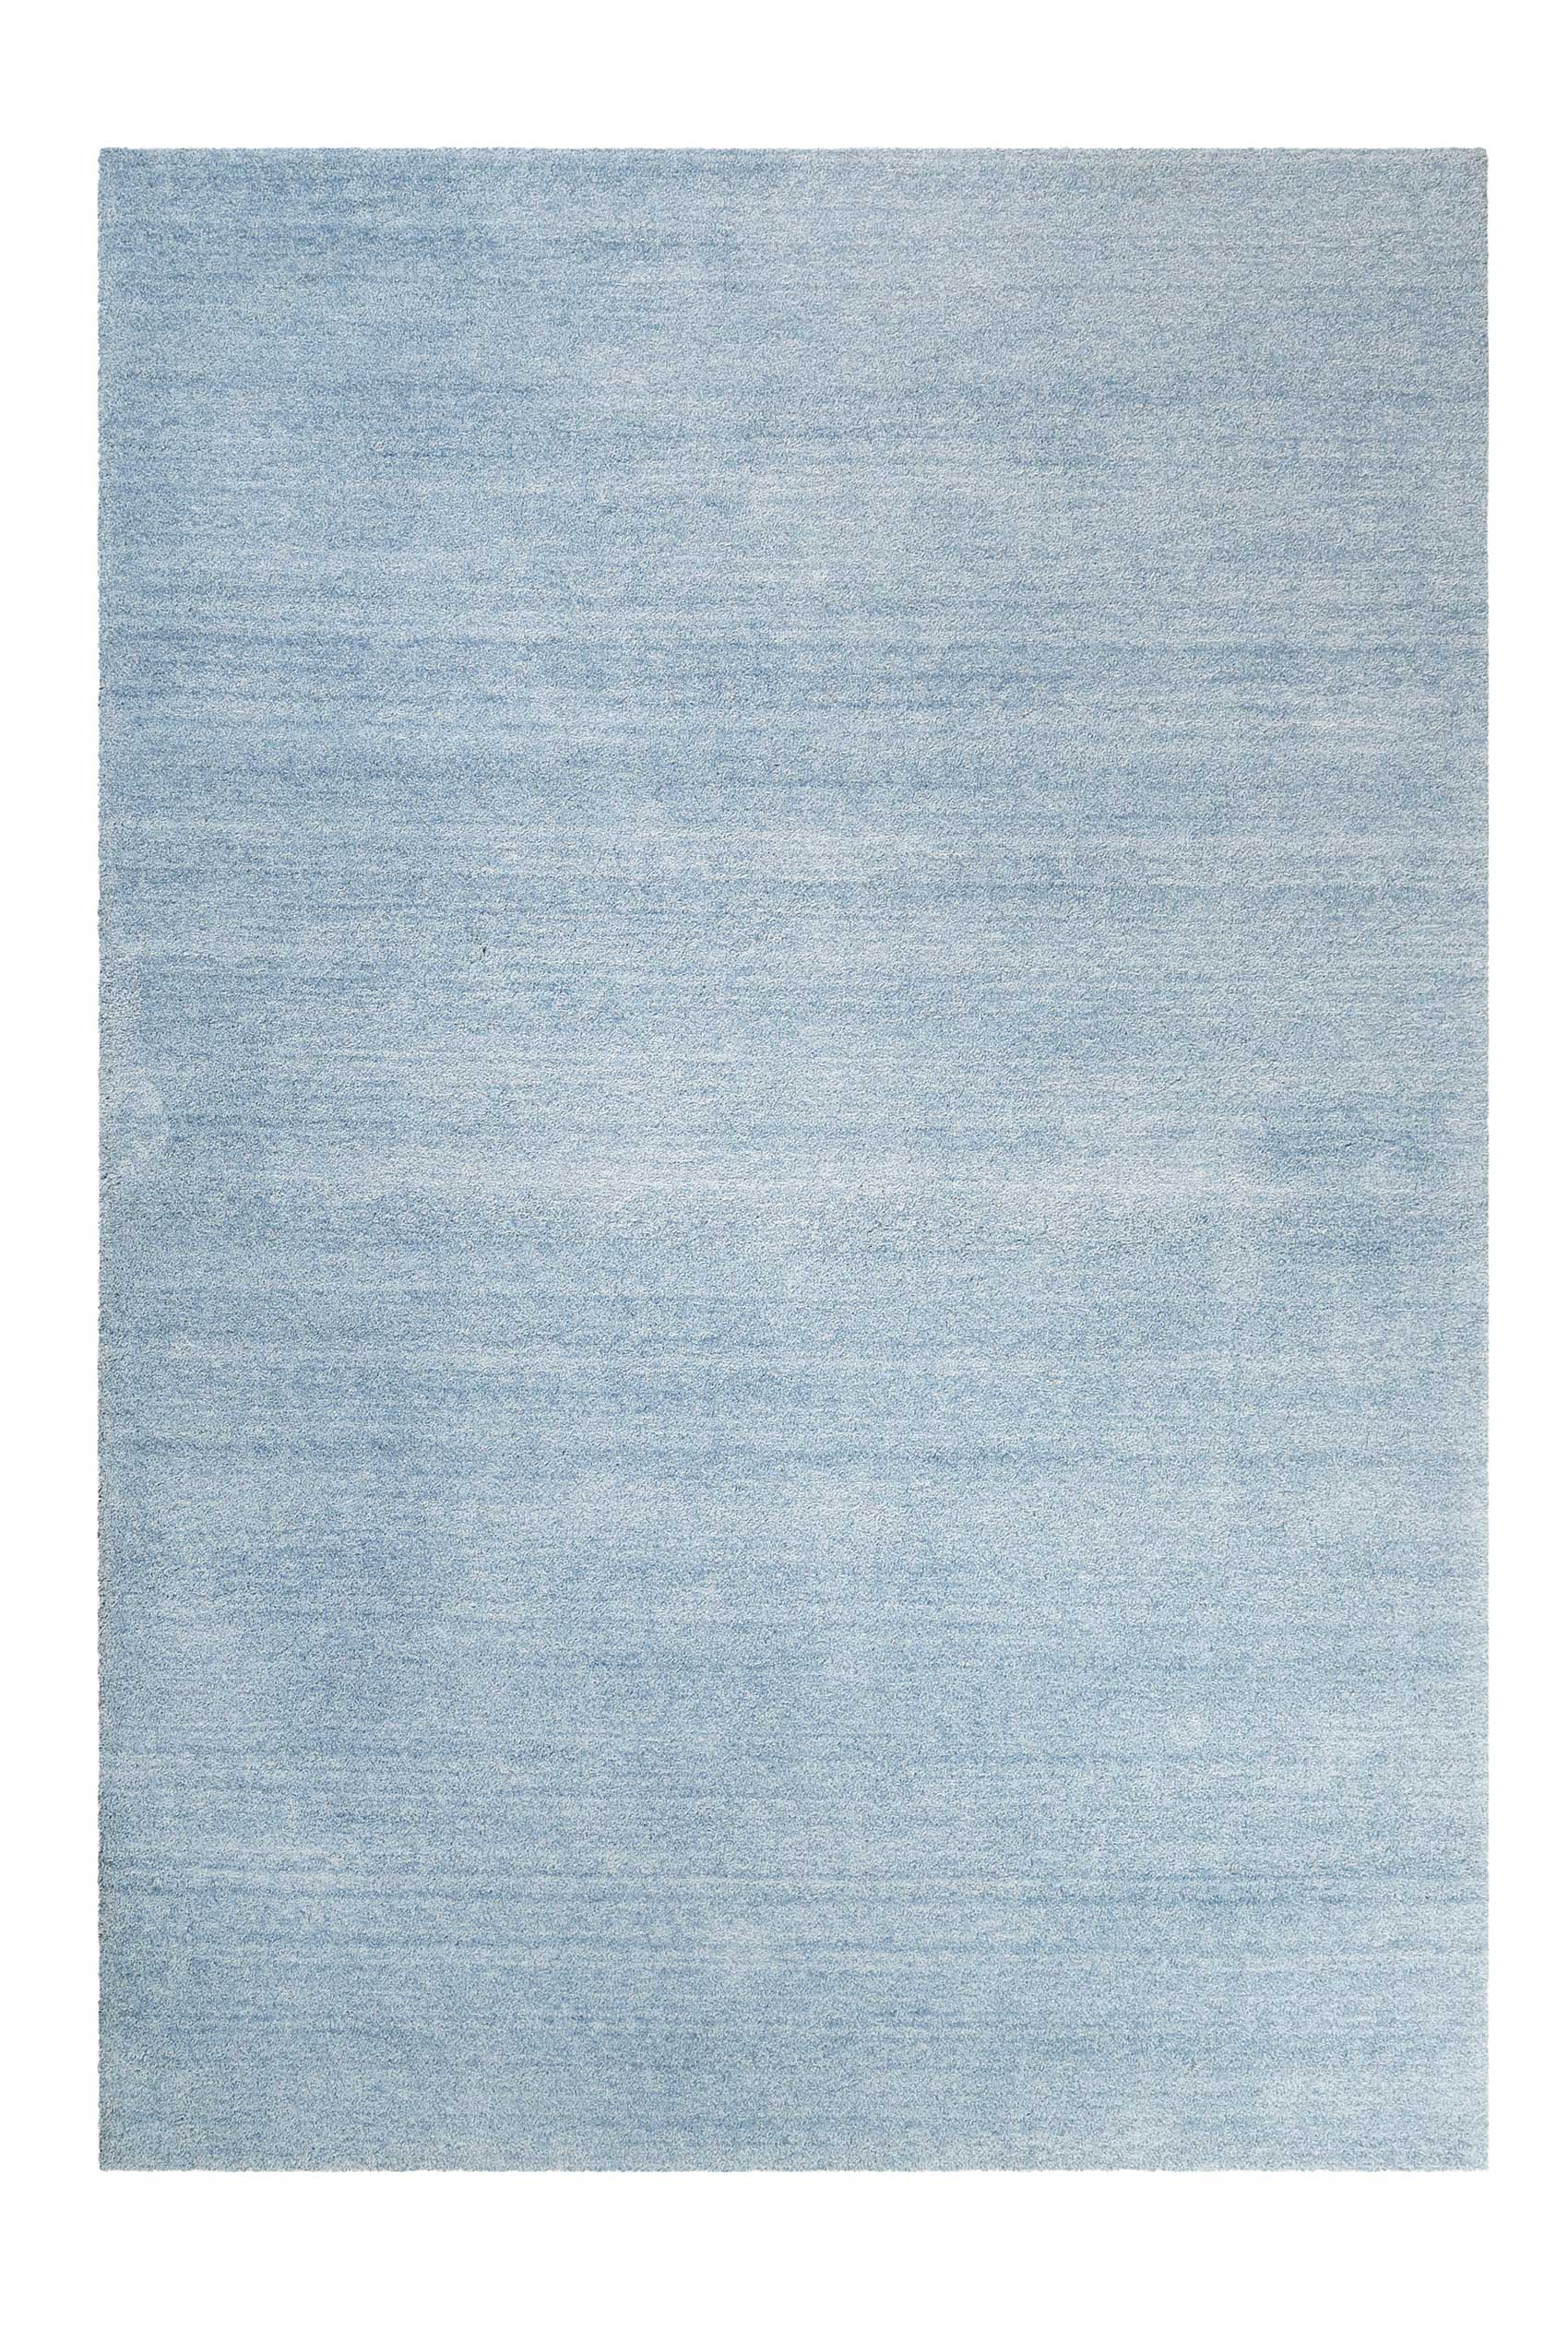 Esprit Teppich Hellblau meliert » Outlet-Teppiche – « Loft Hochflor